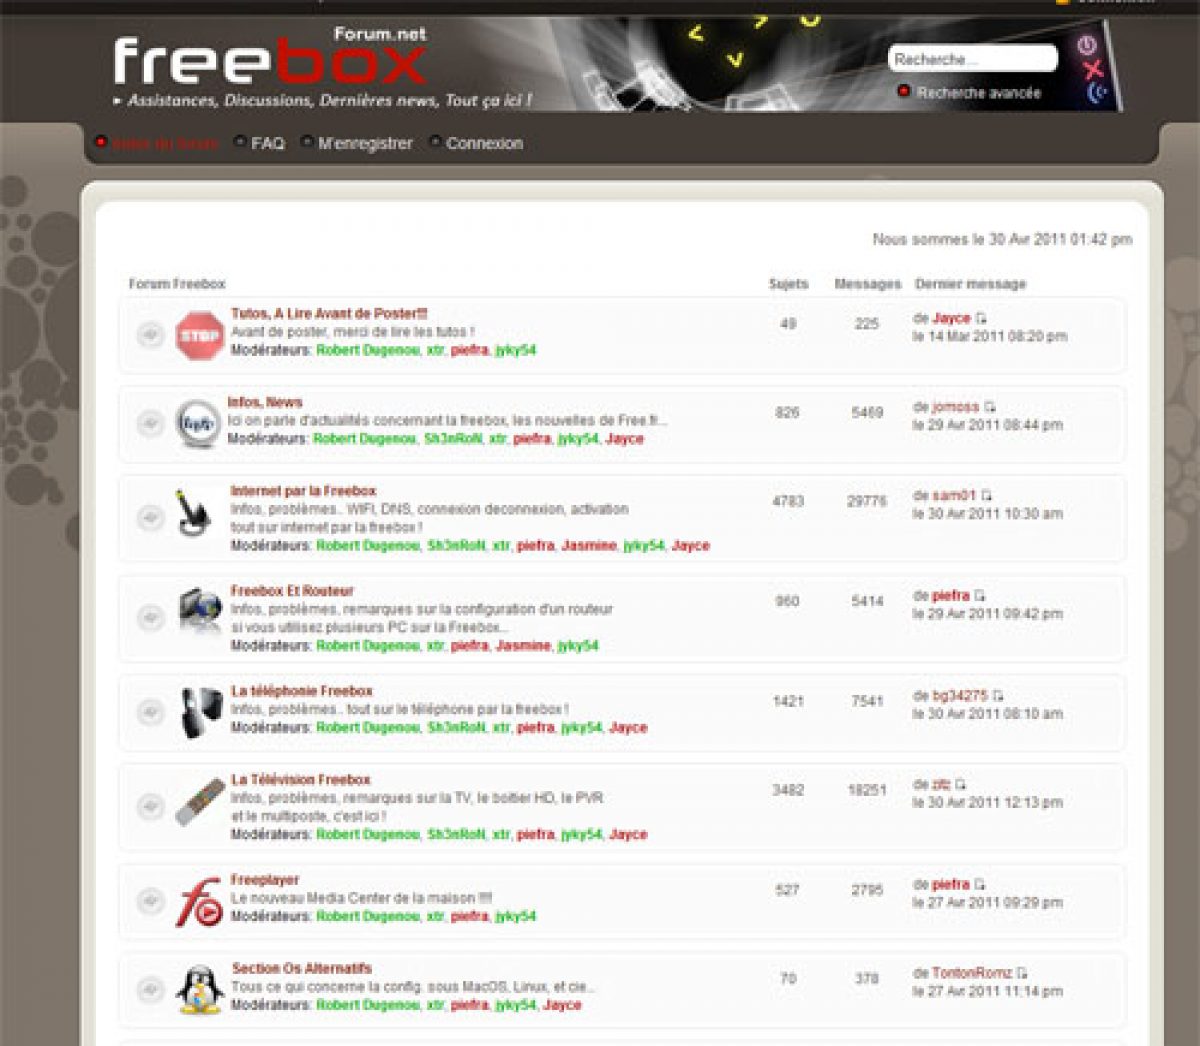 Freebox-Forum.net fait peau neuve